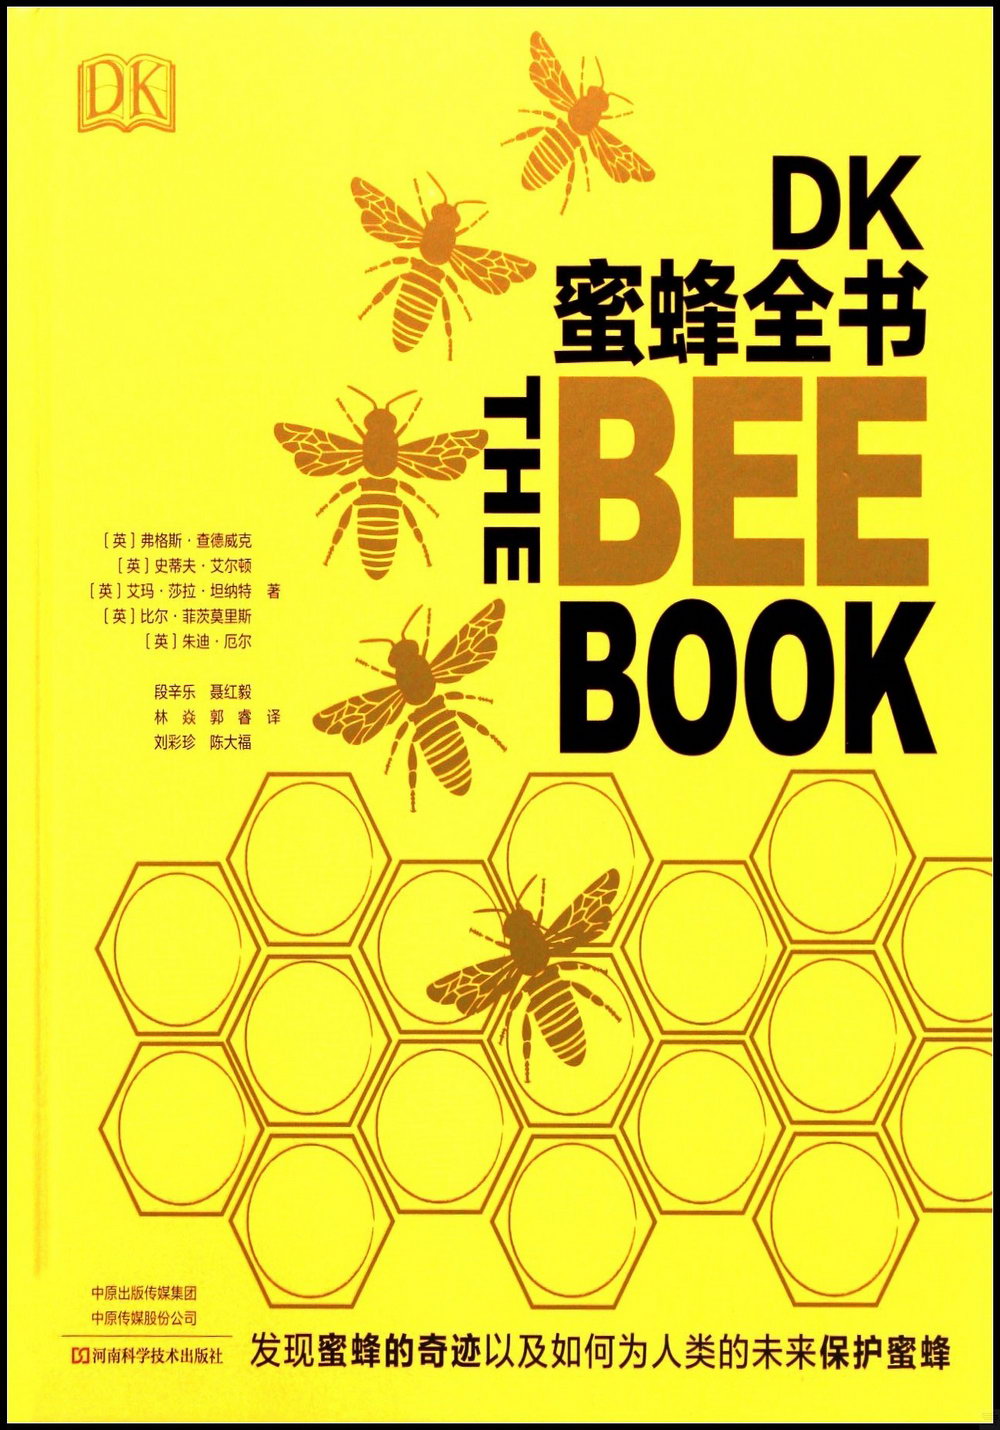 DK蜜蜂全書